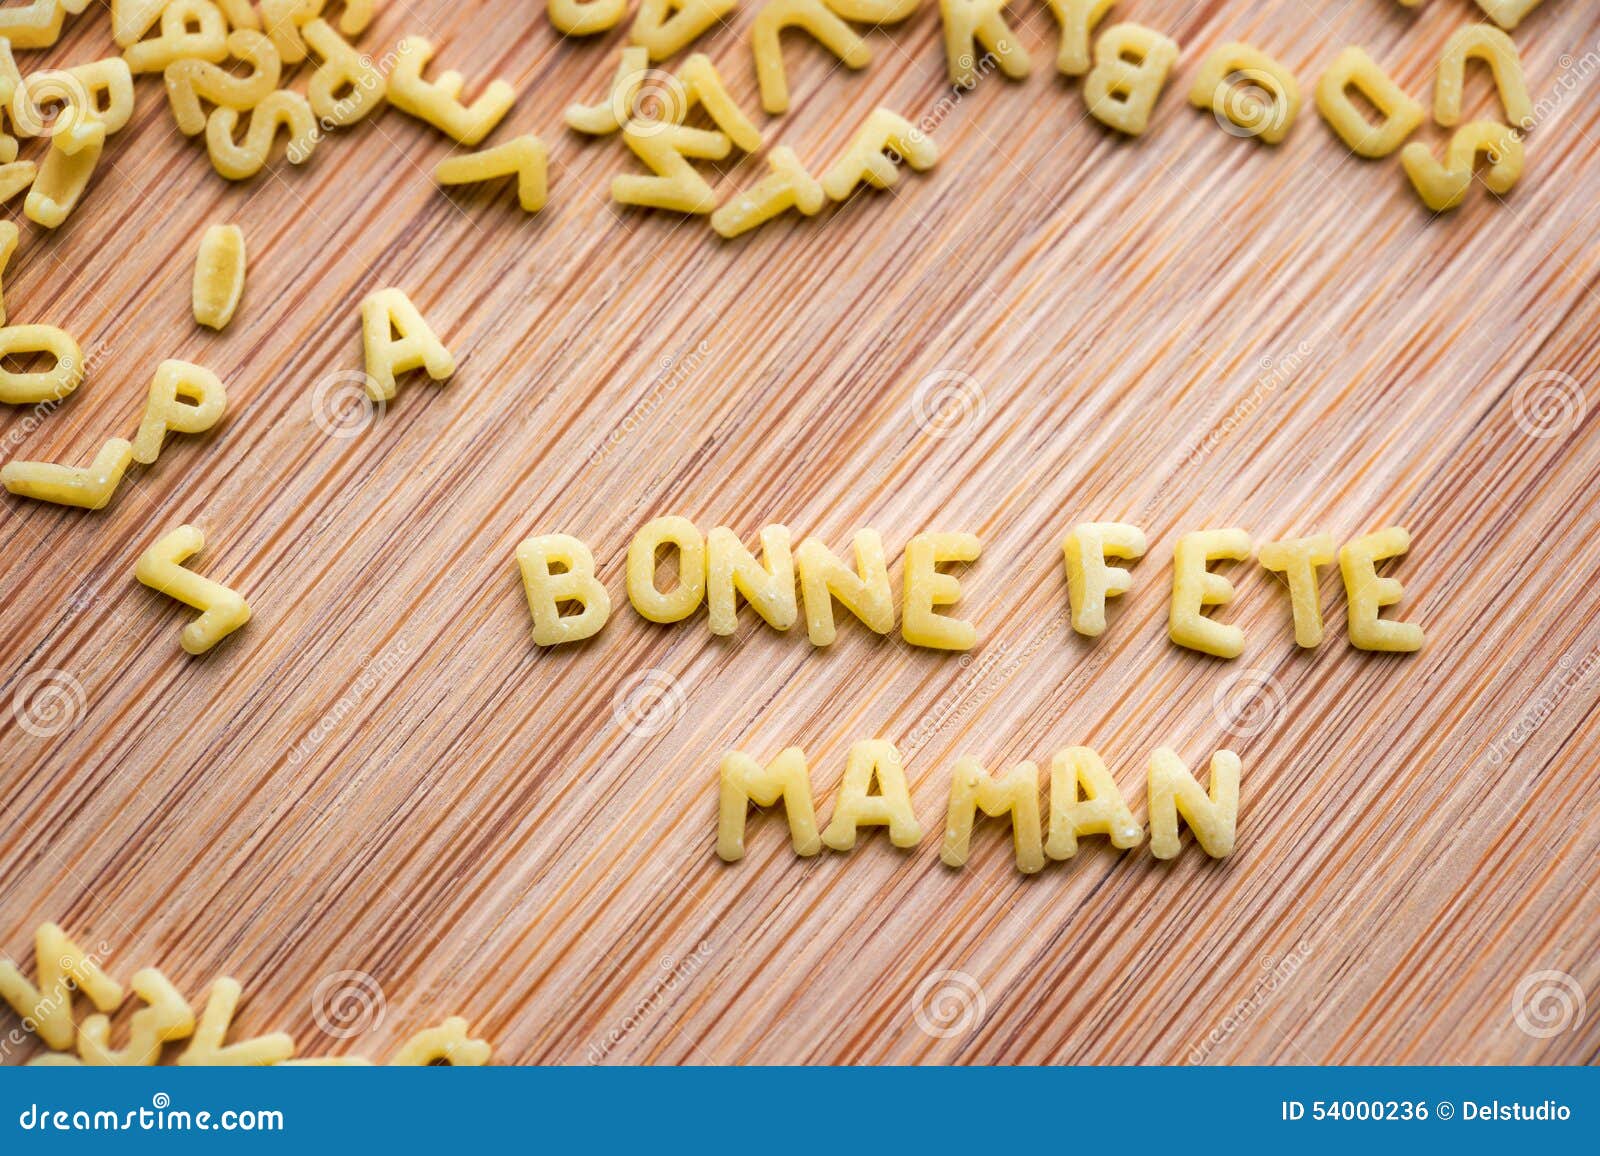 pasta forming the text bonne fete maman